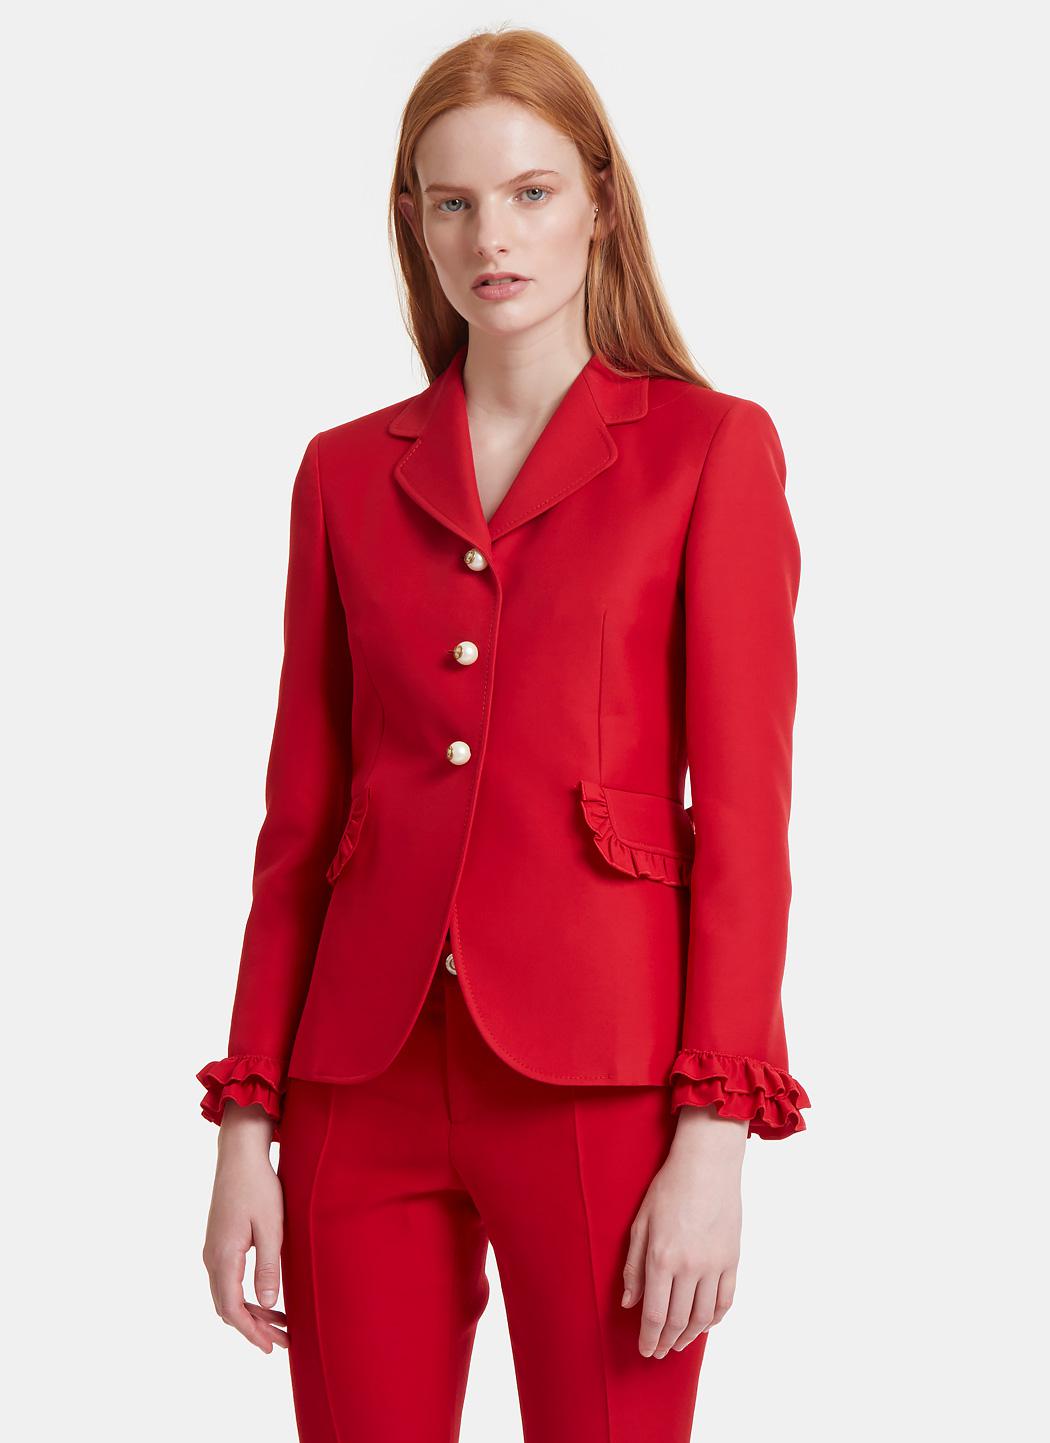 40 Womens red blazer jackets ideas 5 – Style Female